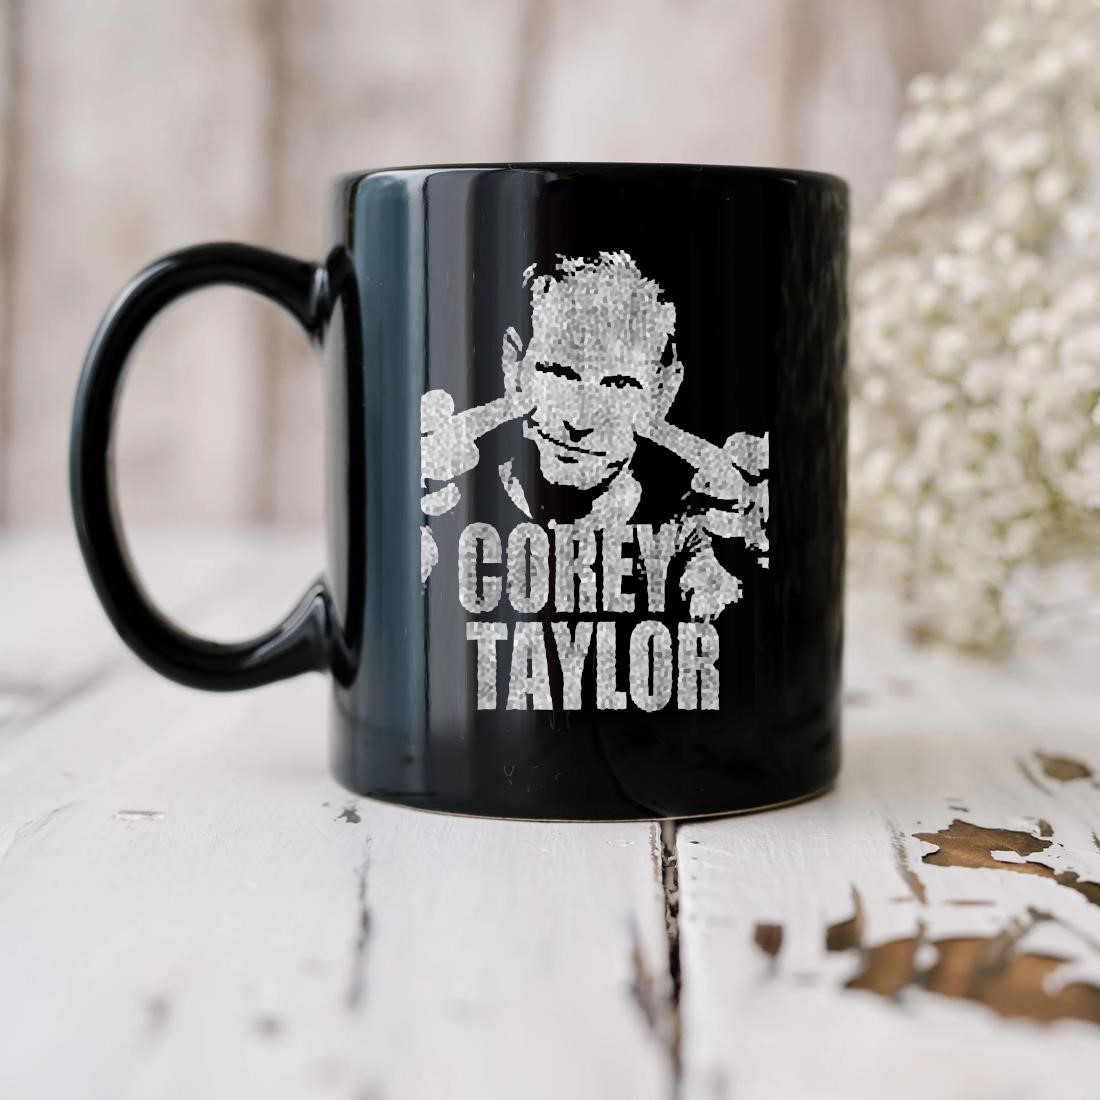 Corey Taylor Cmft Middle Finger Mug biu.jpg